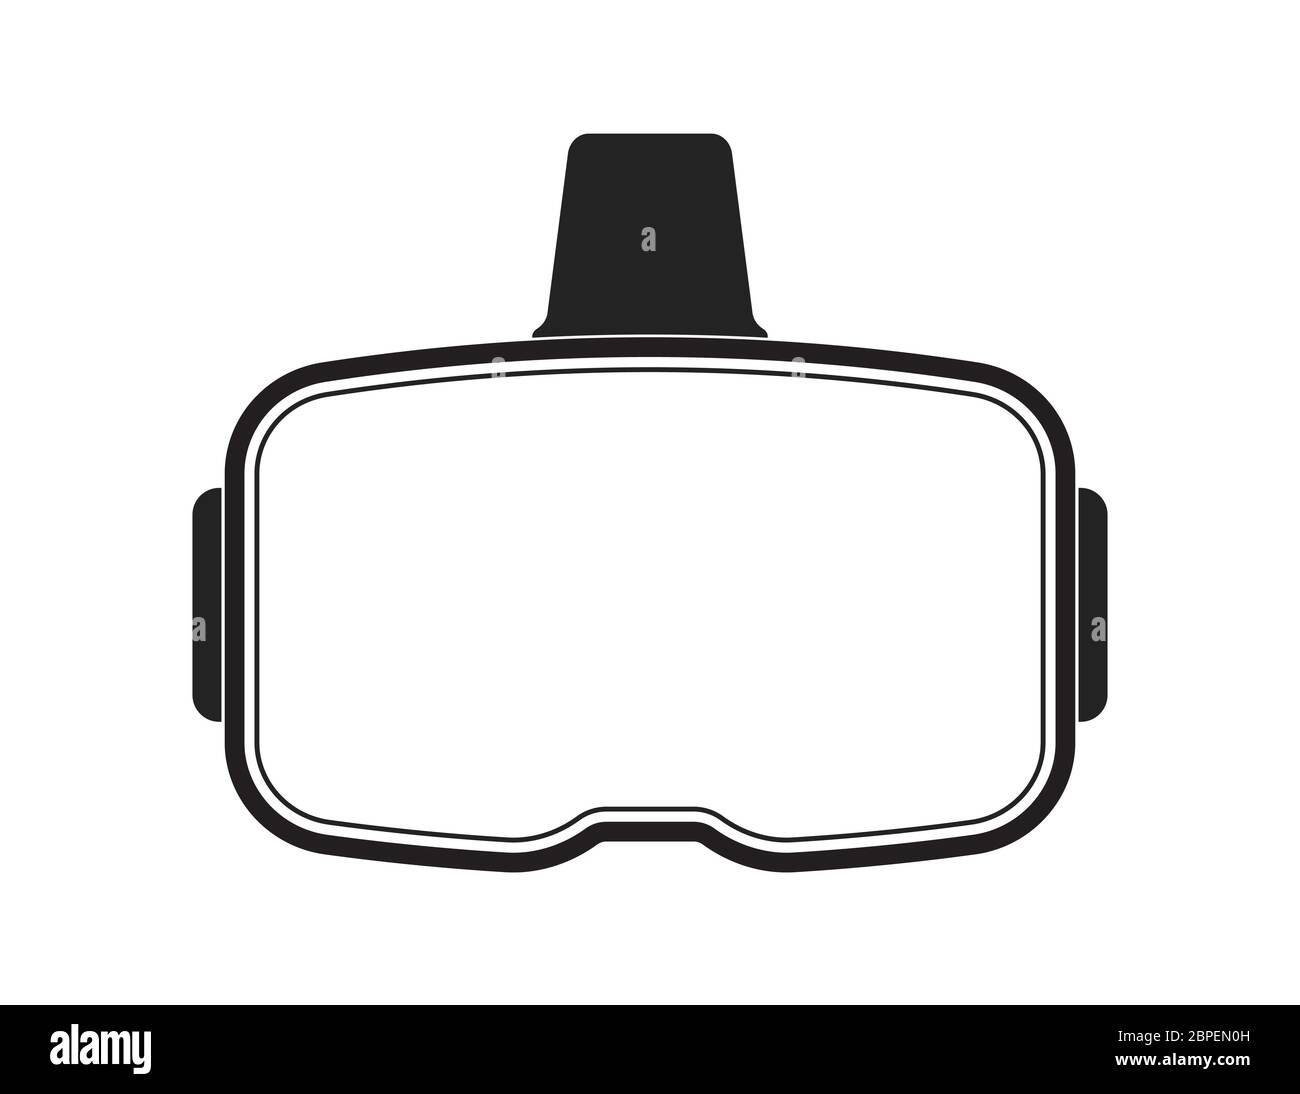 VR headset with blank visor for custom modifications Stock Photo